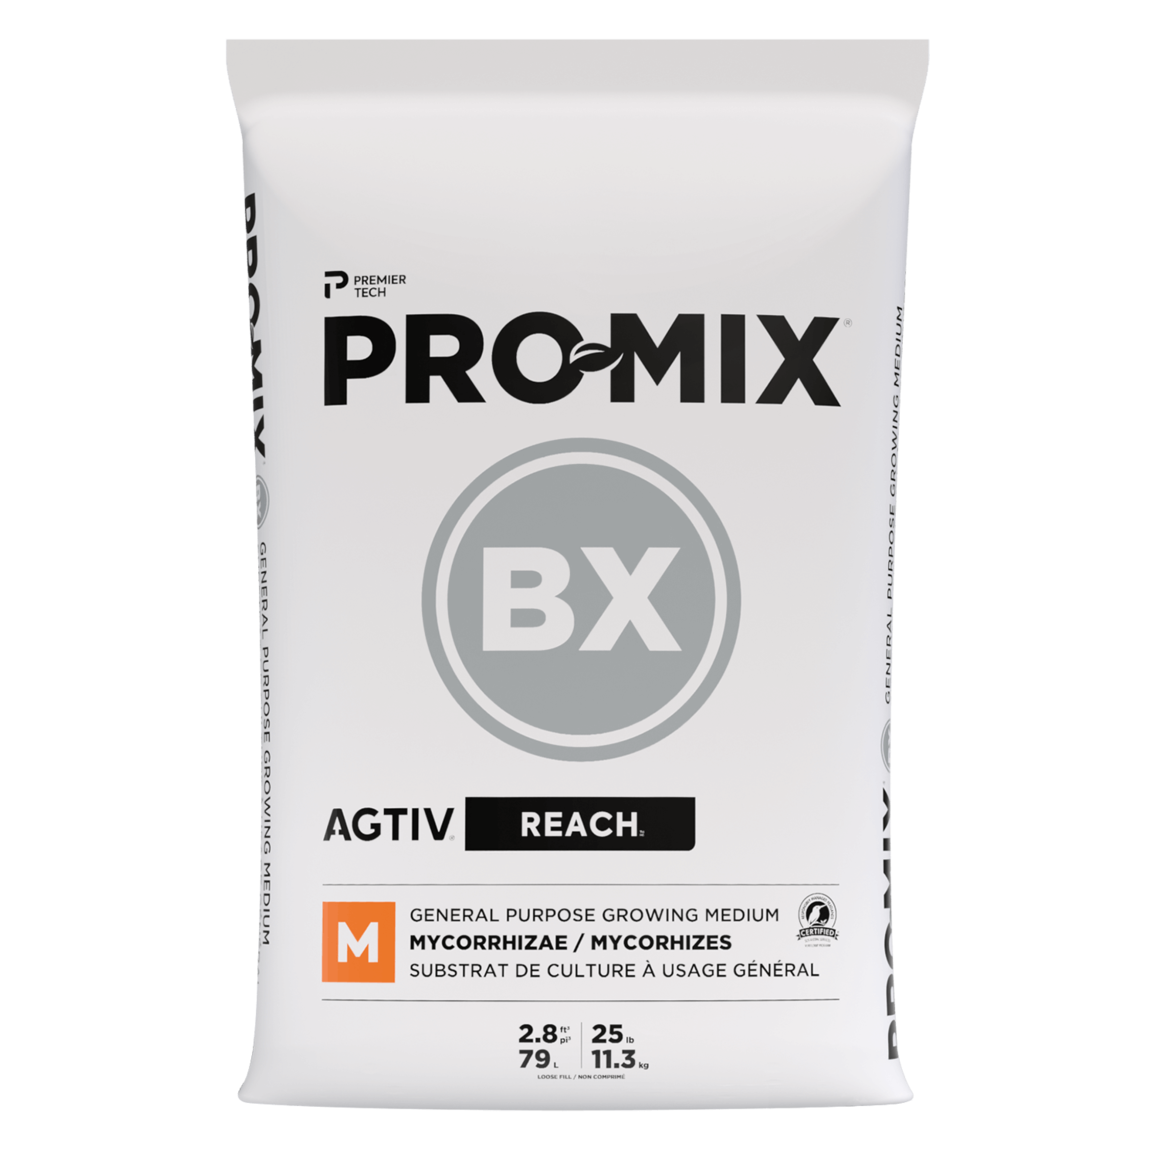 PRO-MIX BX AGTIV REACH 2.8 cu.ft.